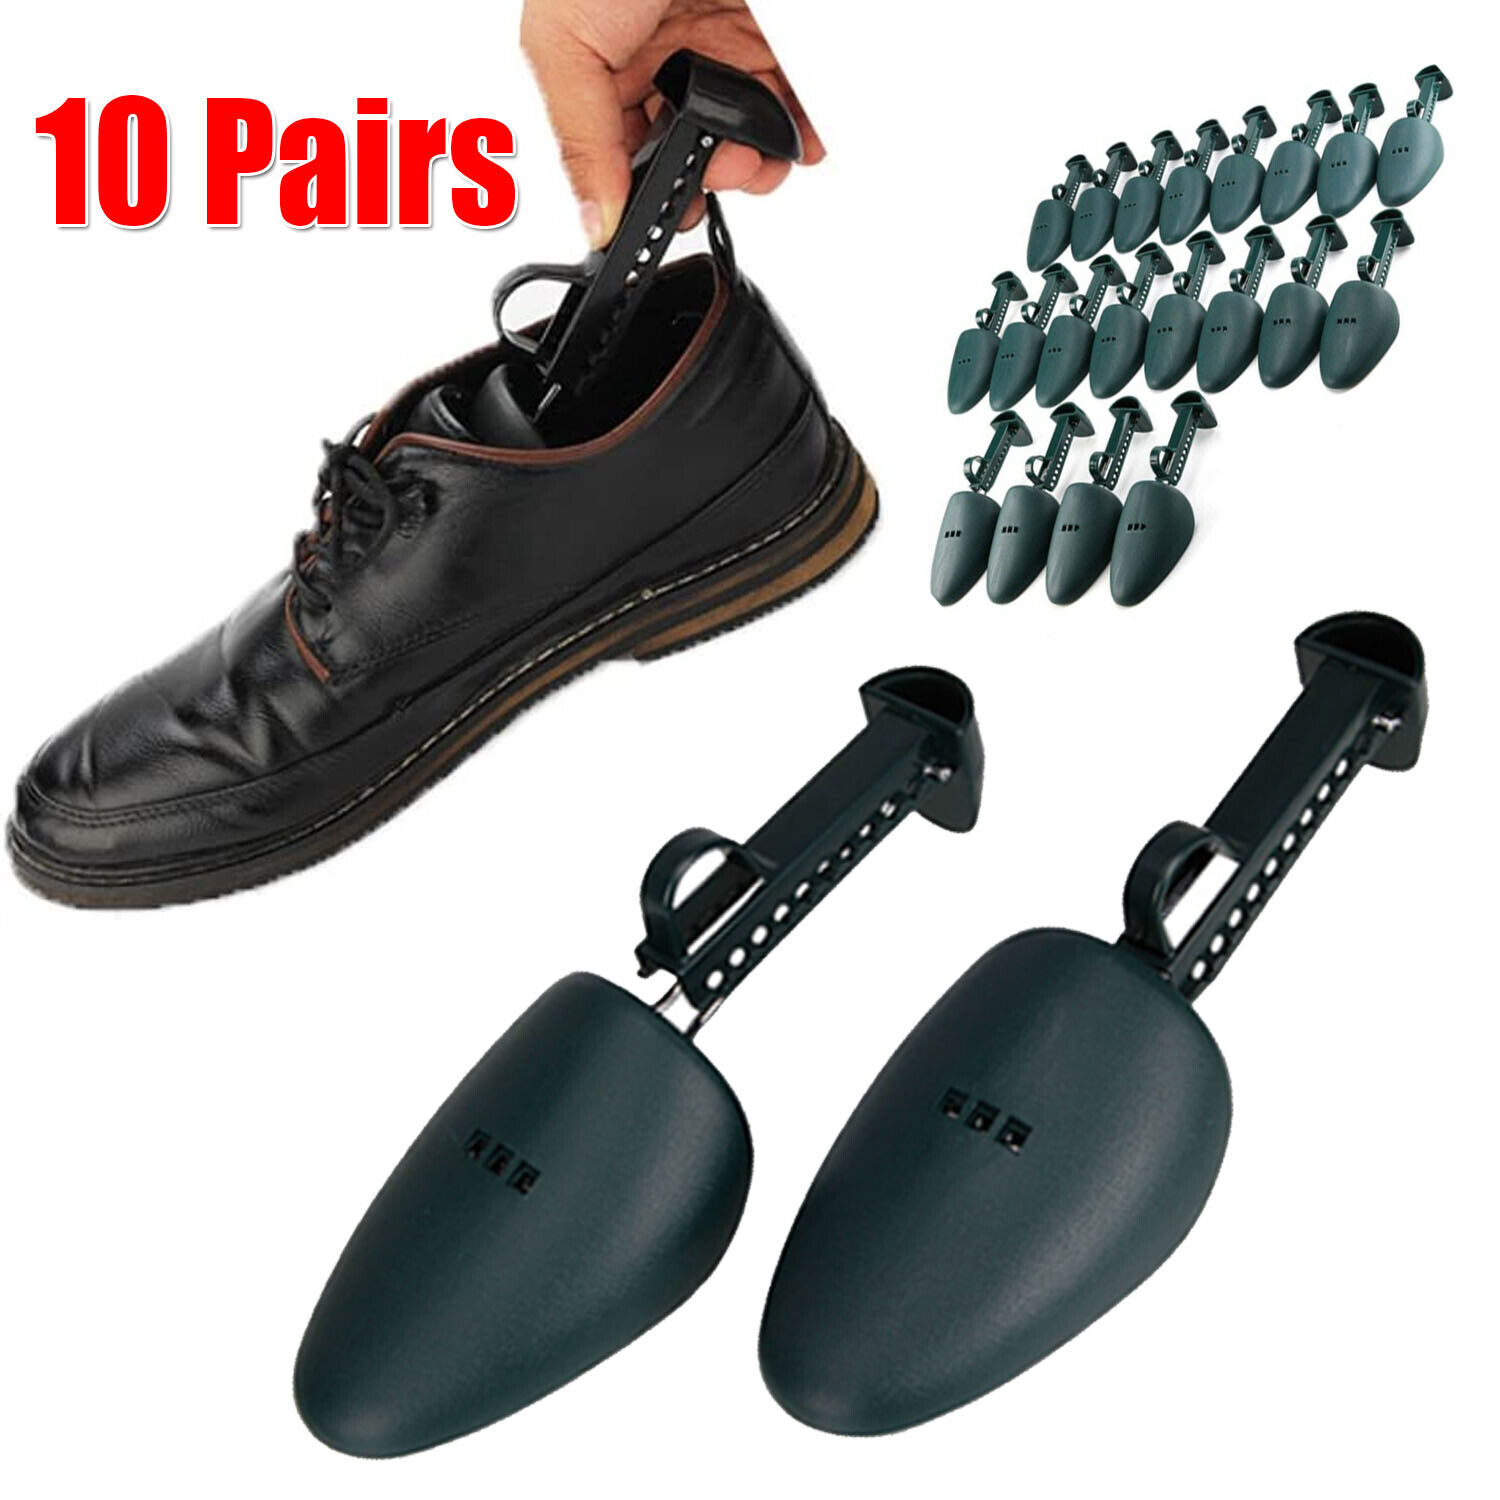 10 Pair Men Adjustable Shoe Care Tree Stretcher Shaper Support Keeper